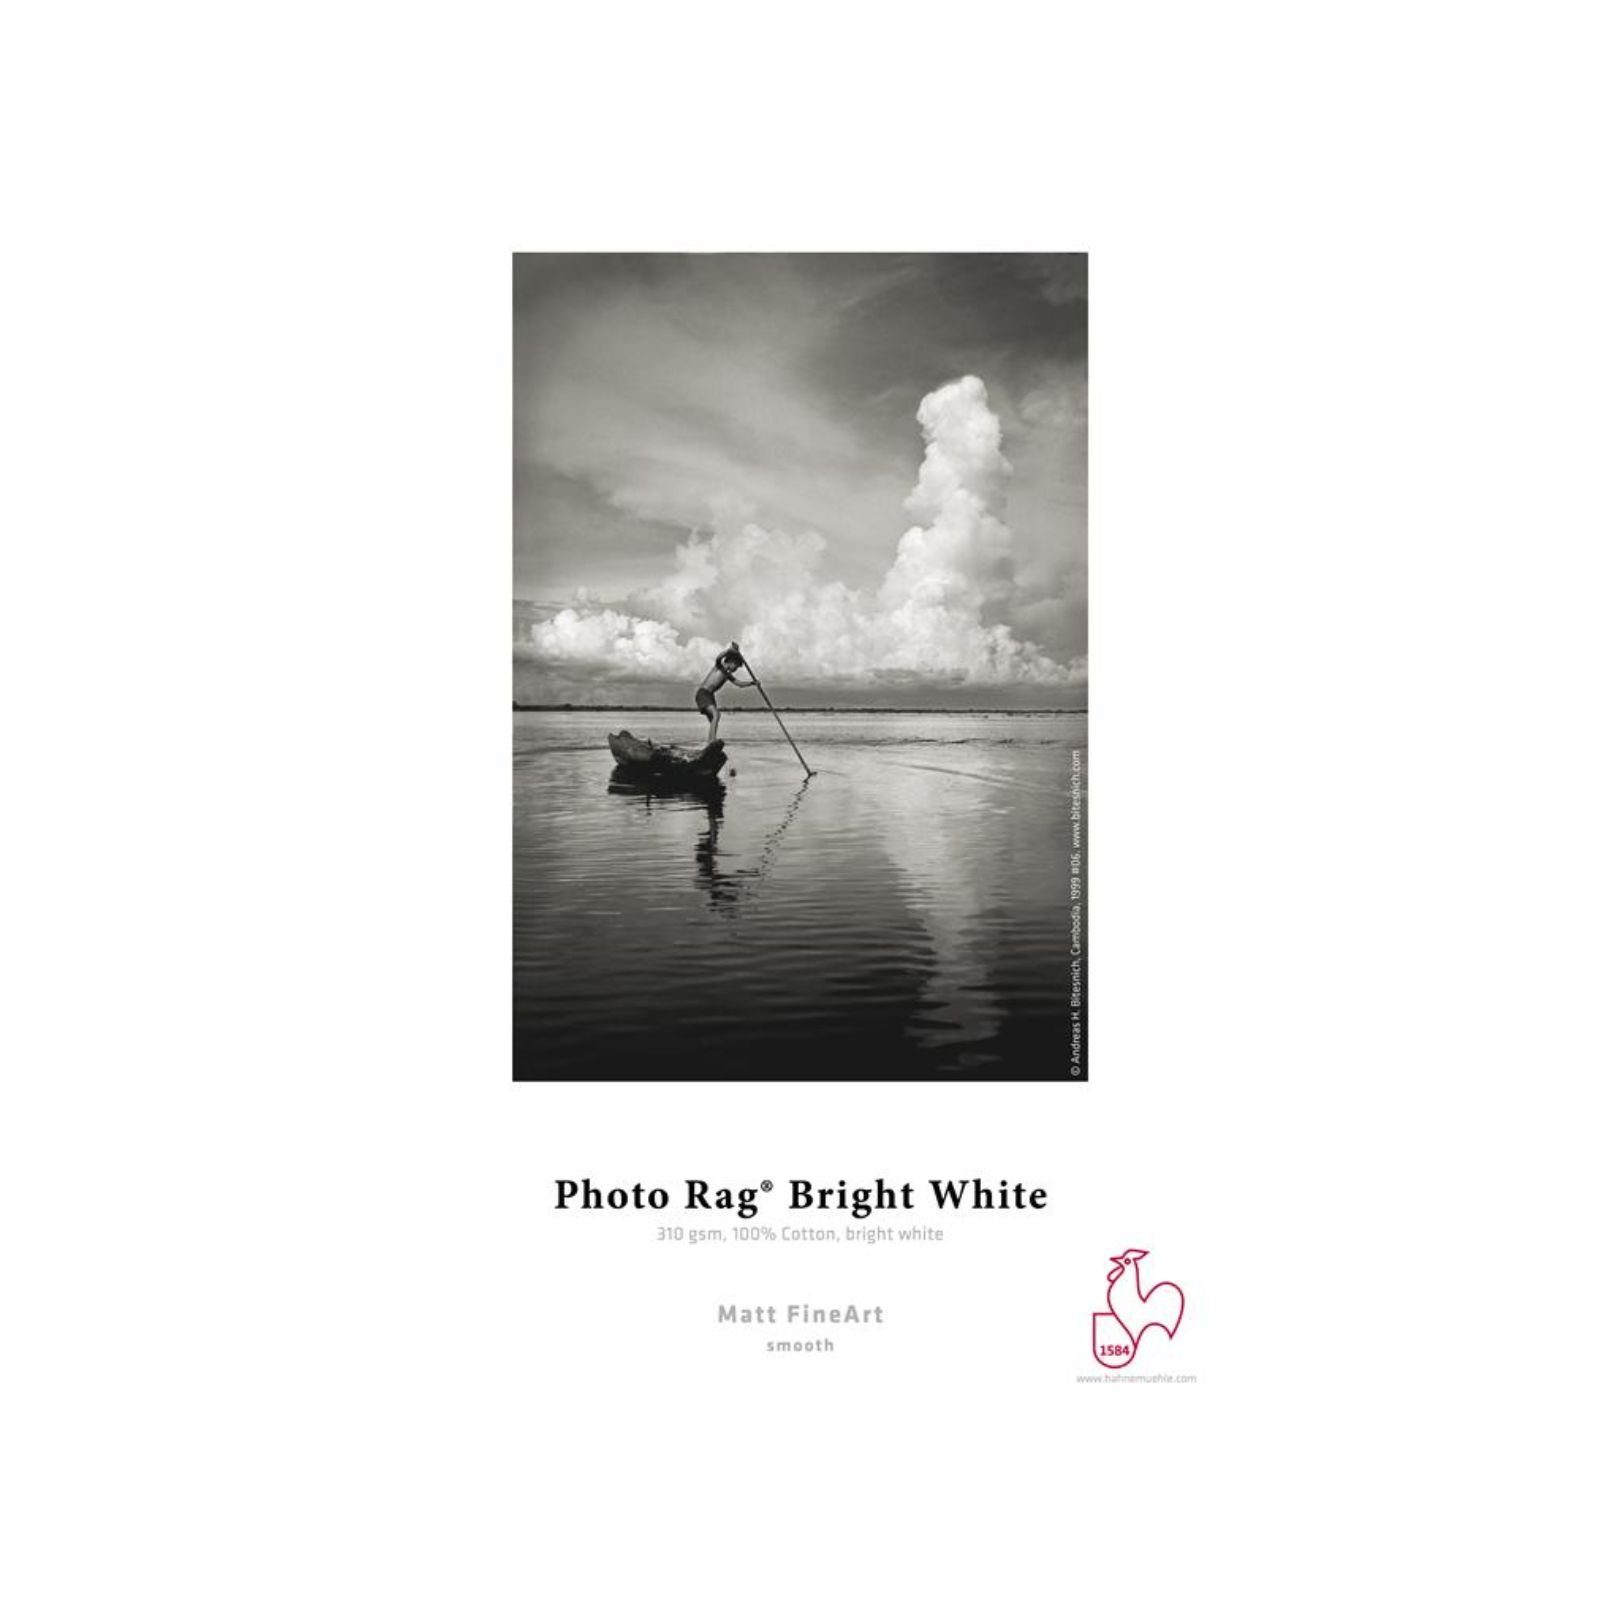 Hahnemühle Fotopapier Photo Rag® Bright White FineArt Inkjet-Papier - 310 g/m² - DIN A4 - | Fotopapier